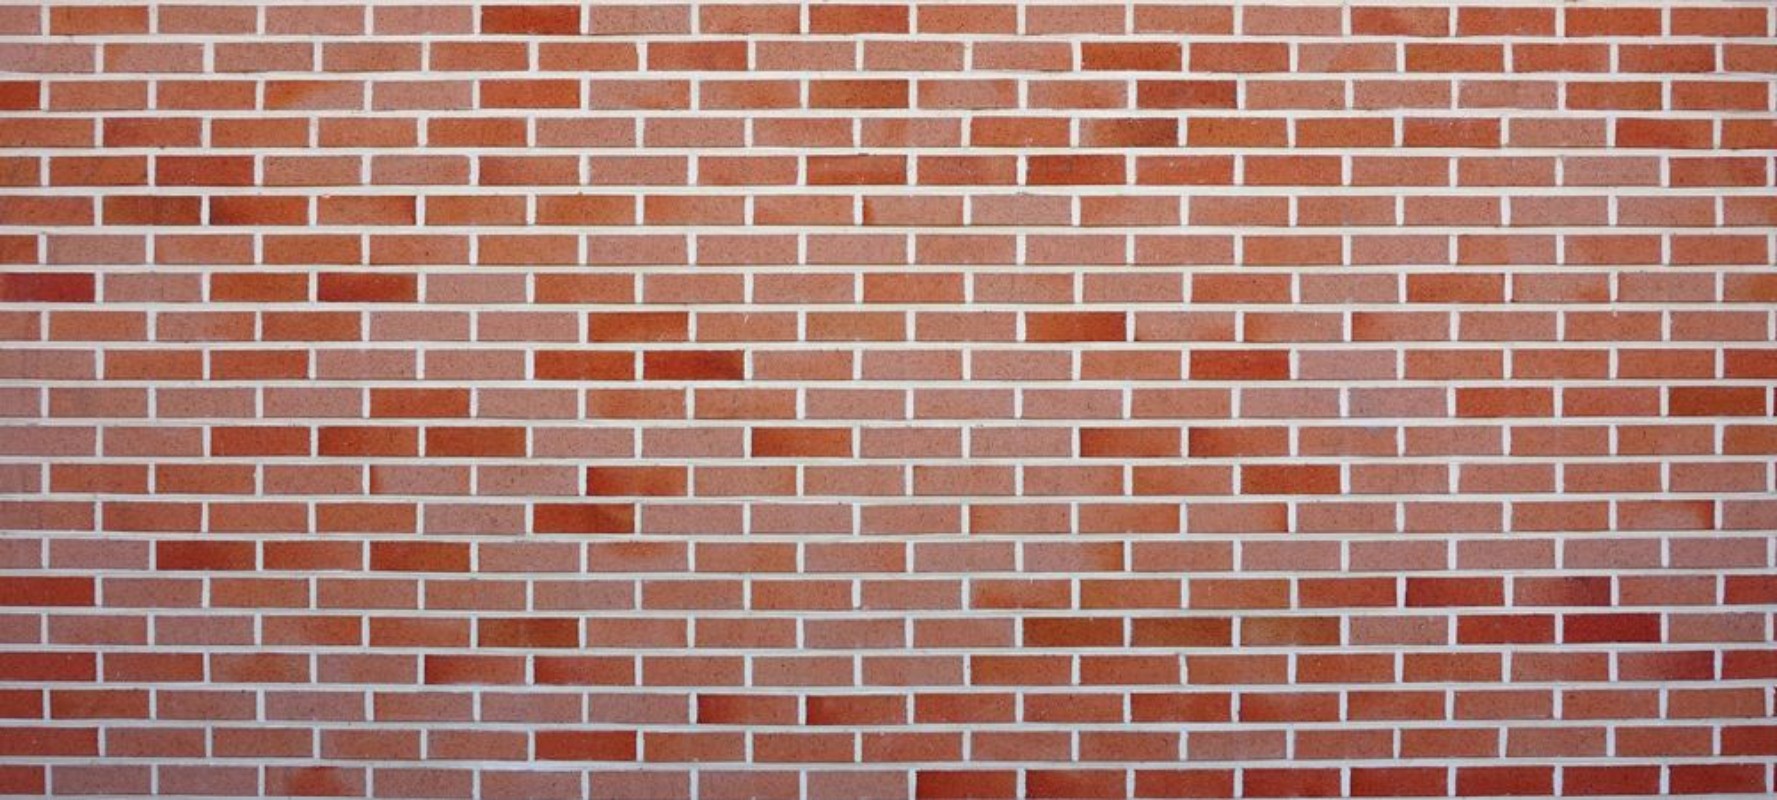 Image de Brick wall texture stone wall